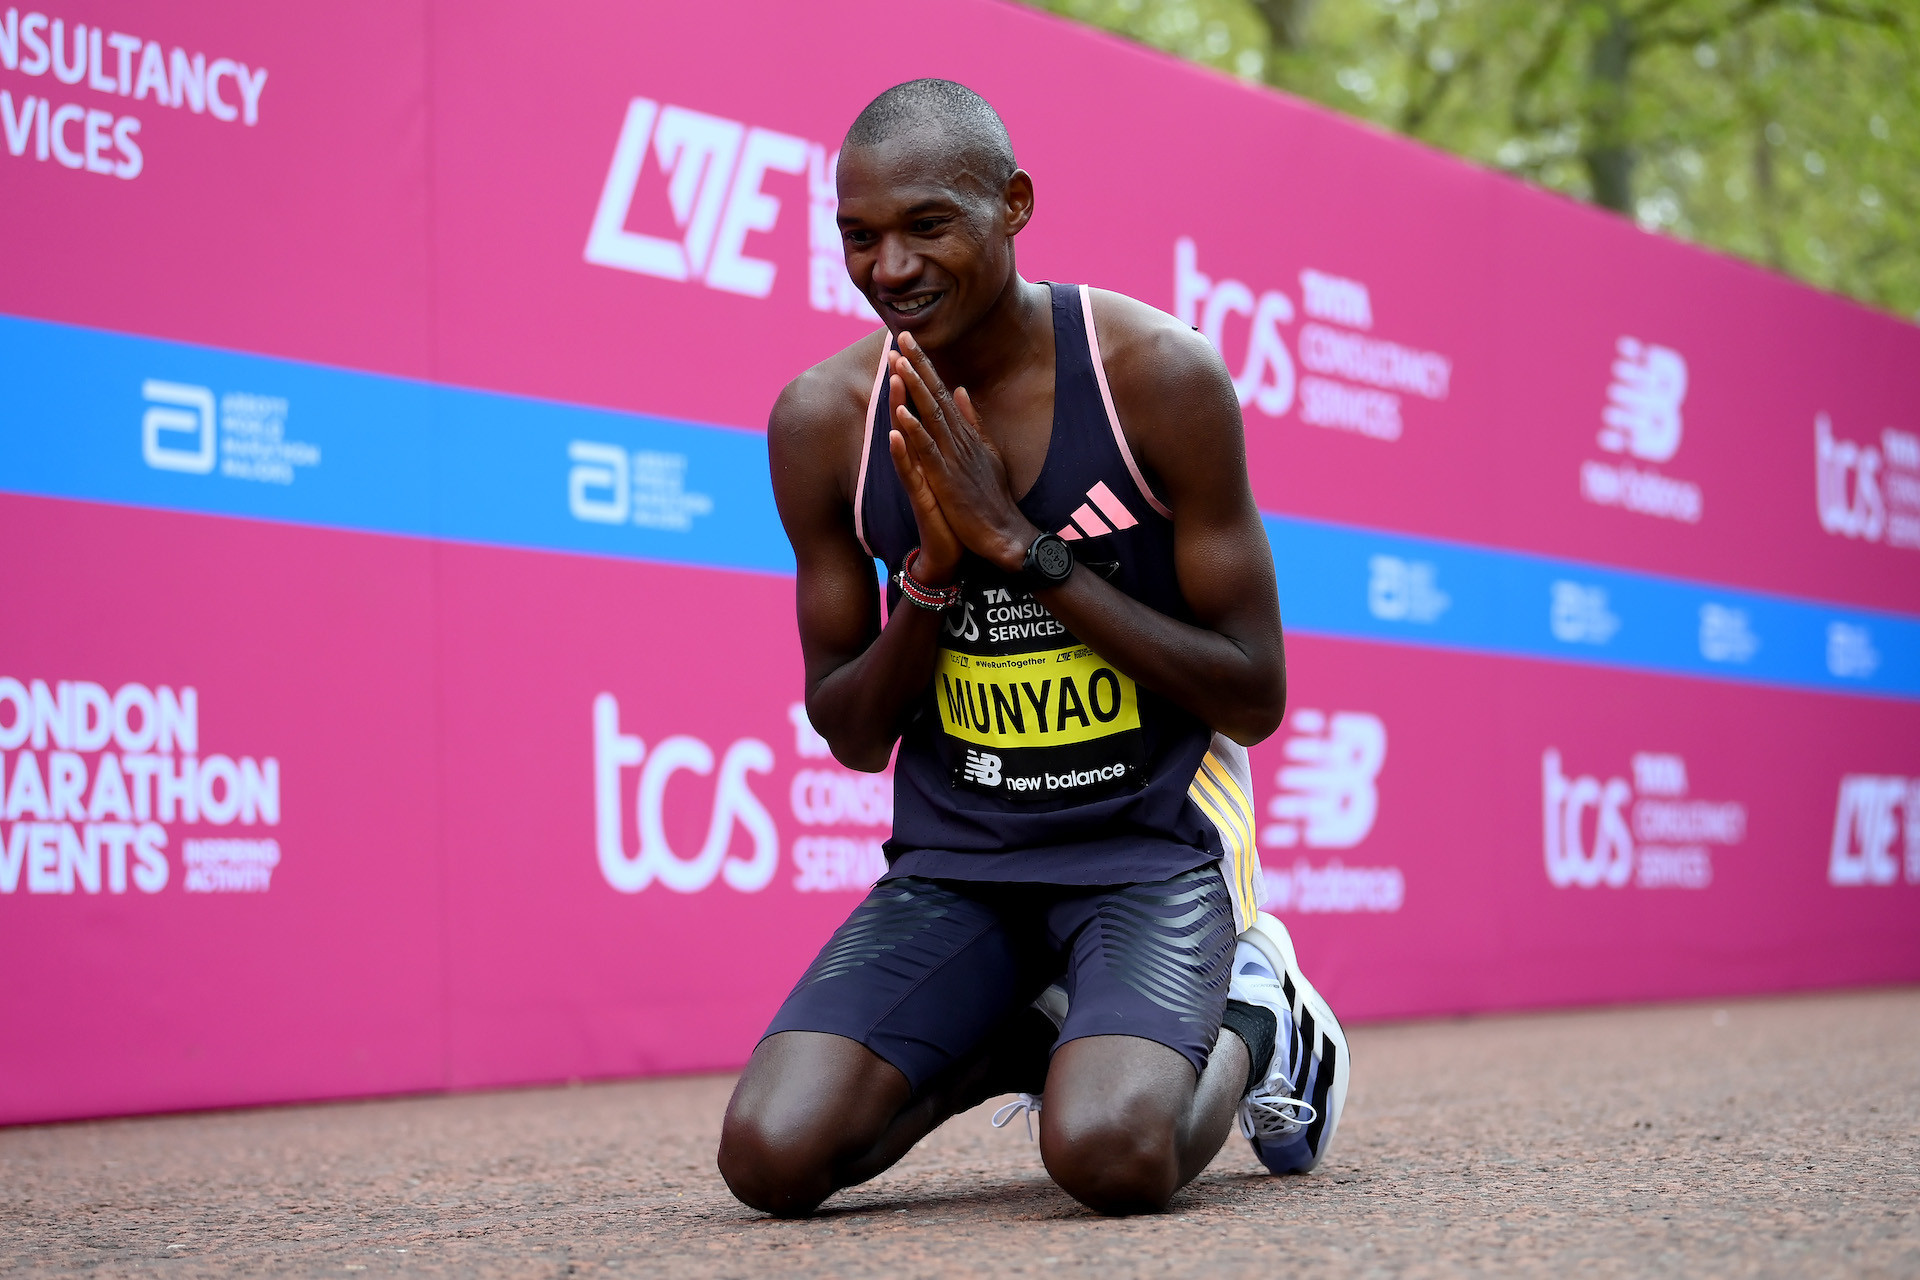 London Marathon winner Munyao to represent Kenya in Paris 2024